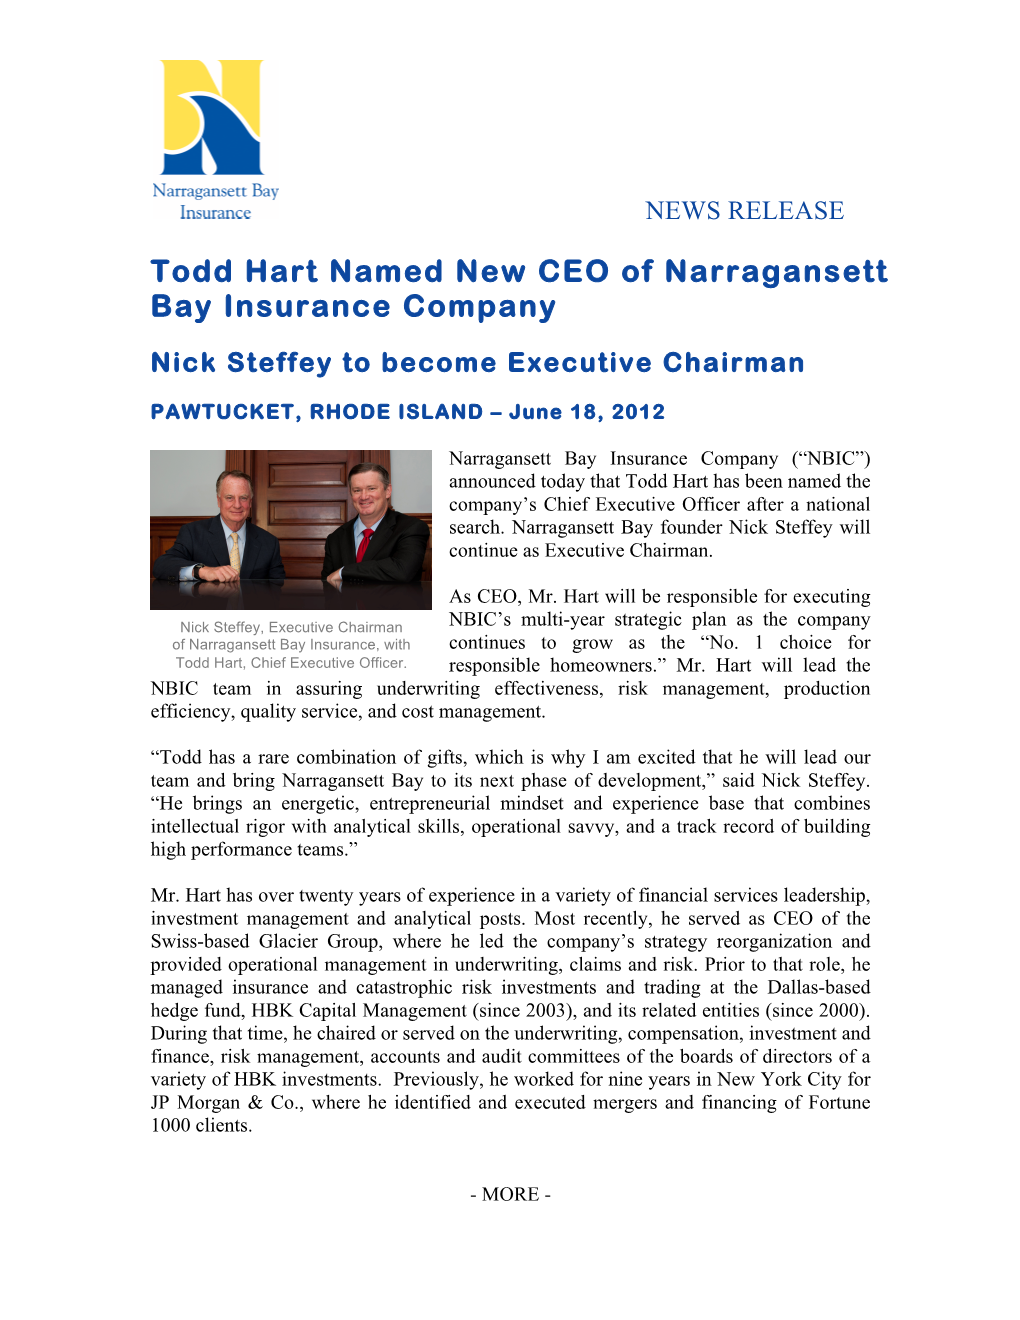 Todd Hart Named New CEO of Narragansett Bay Insurance Company